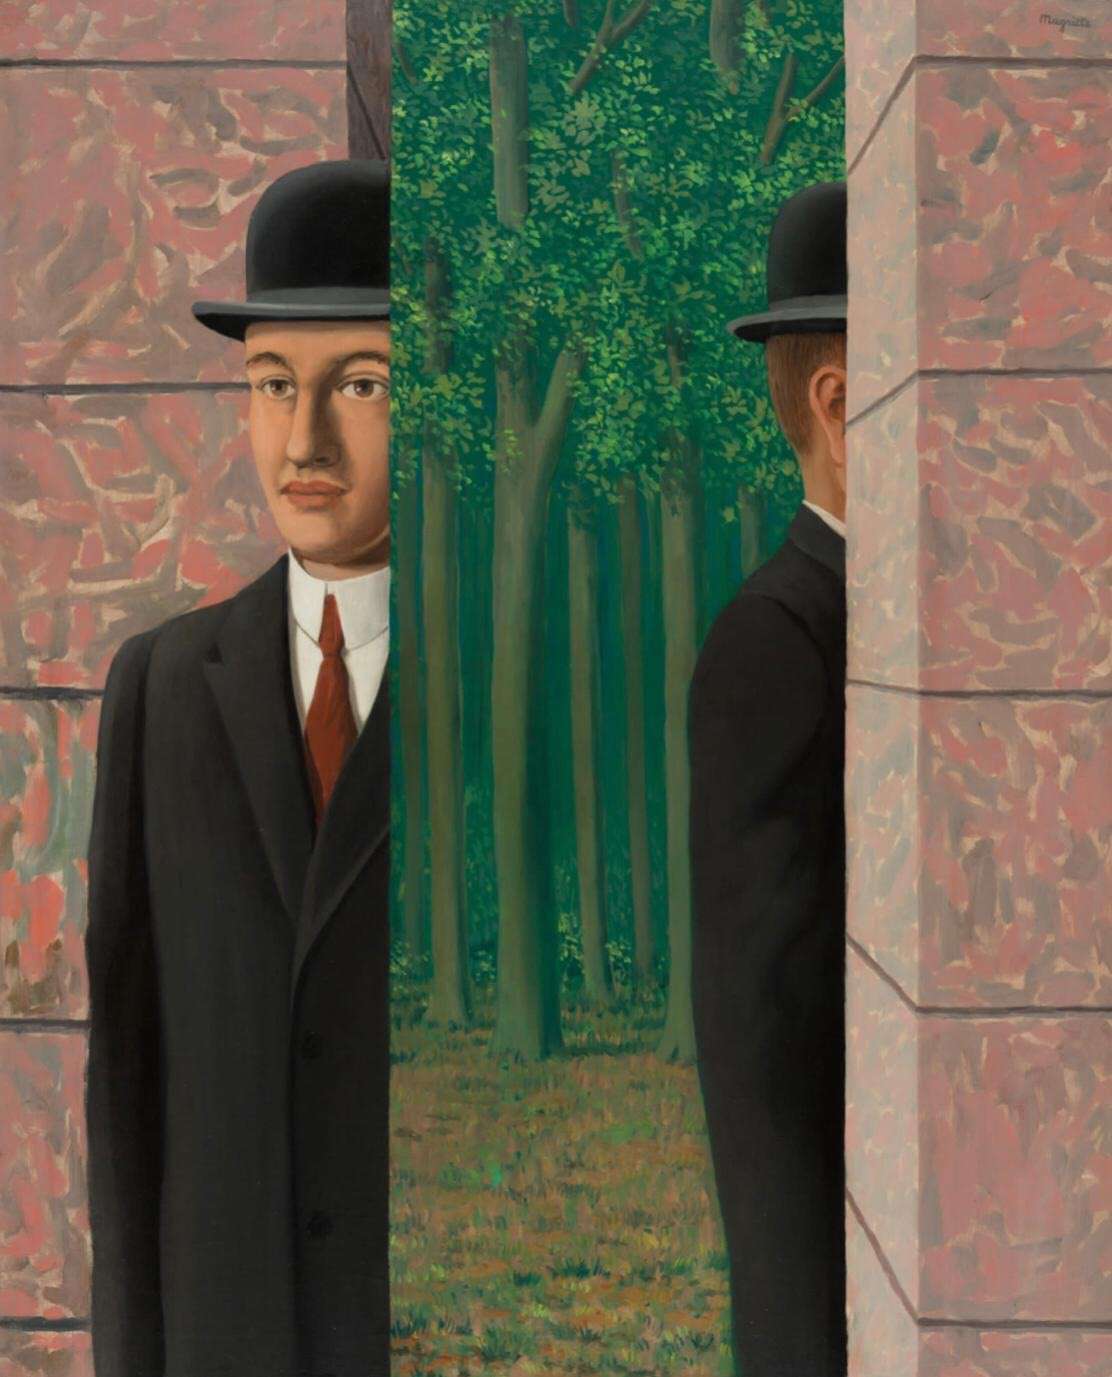 Magritte 